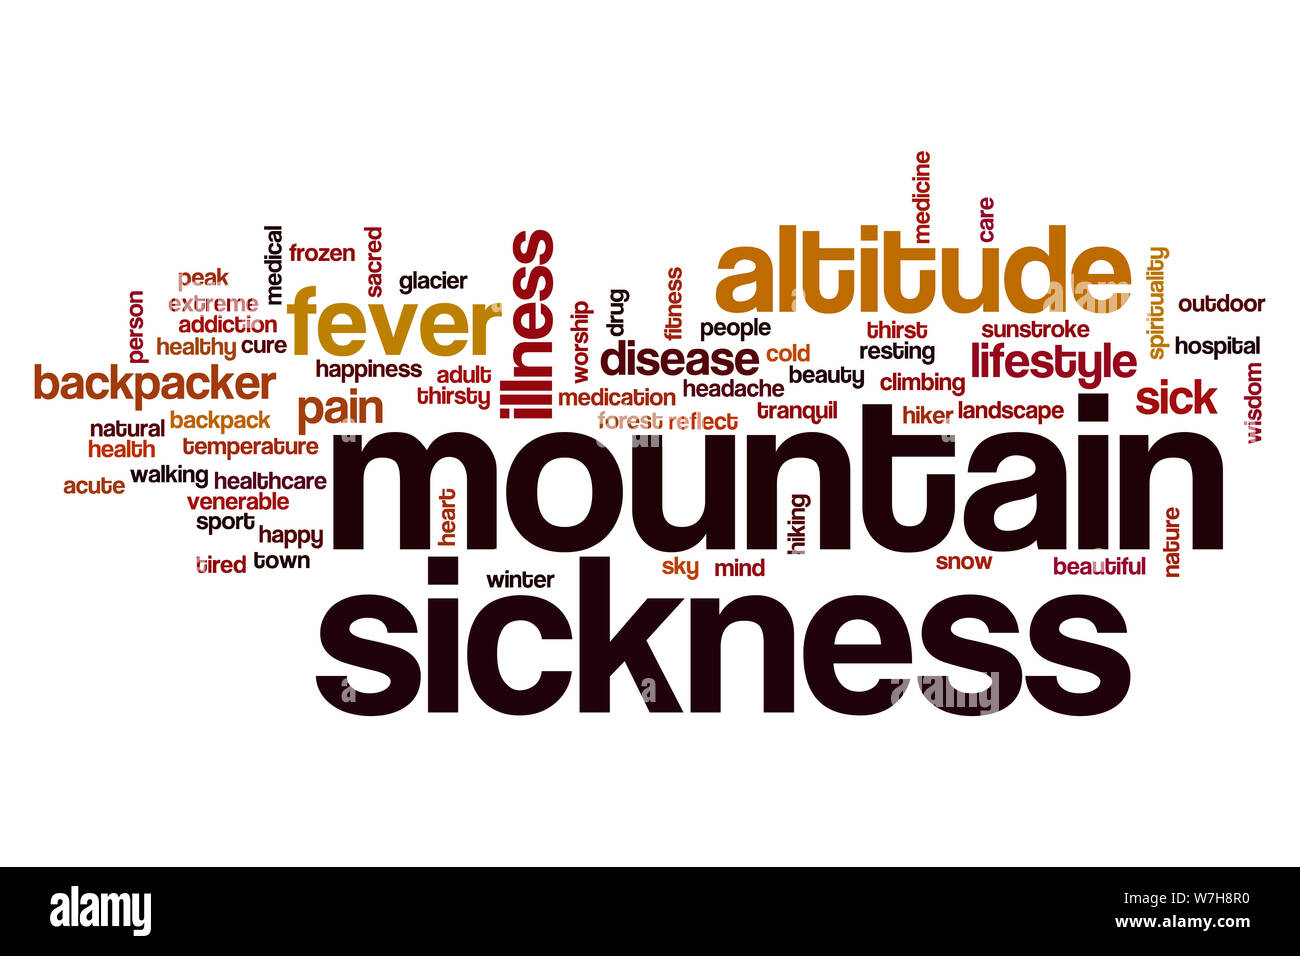 Mountain sickness word cloud concept Stock Photo